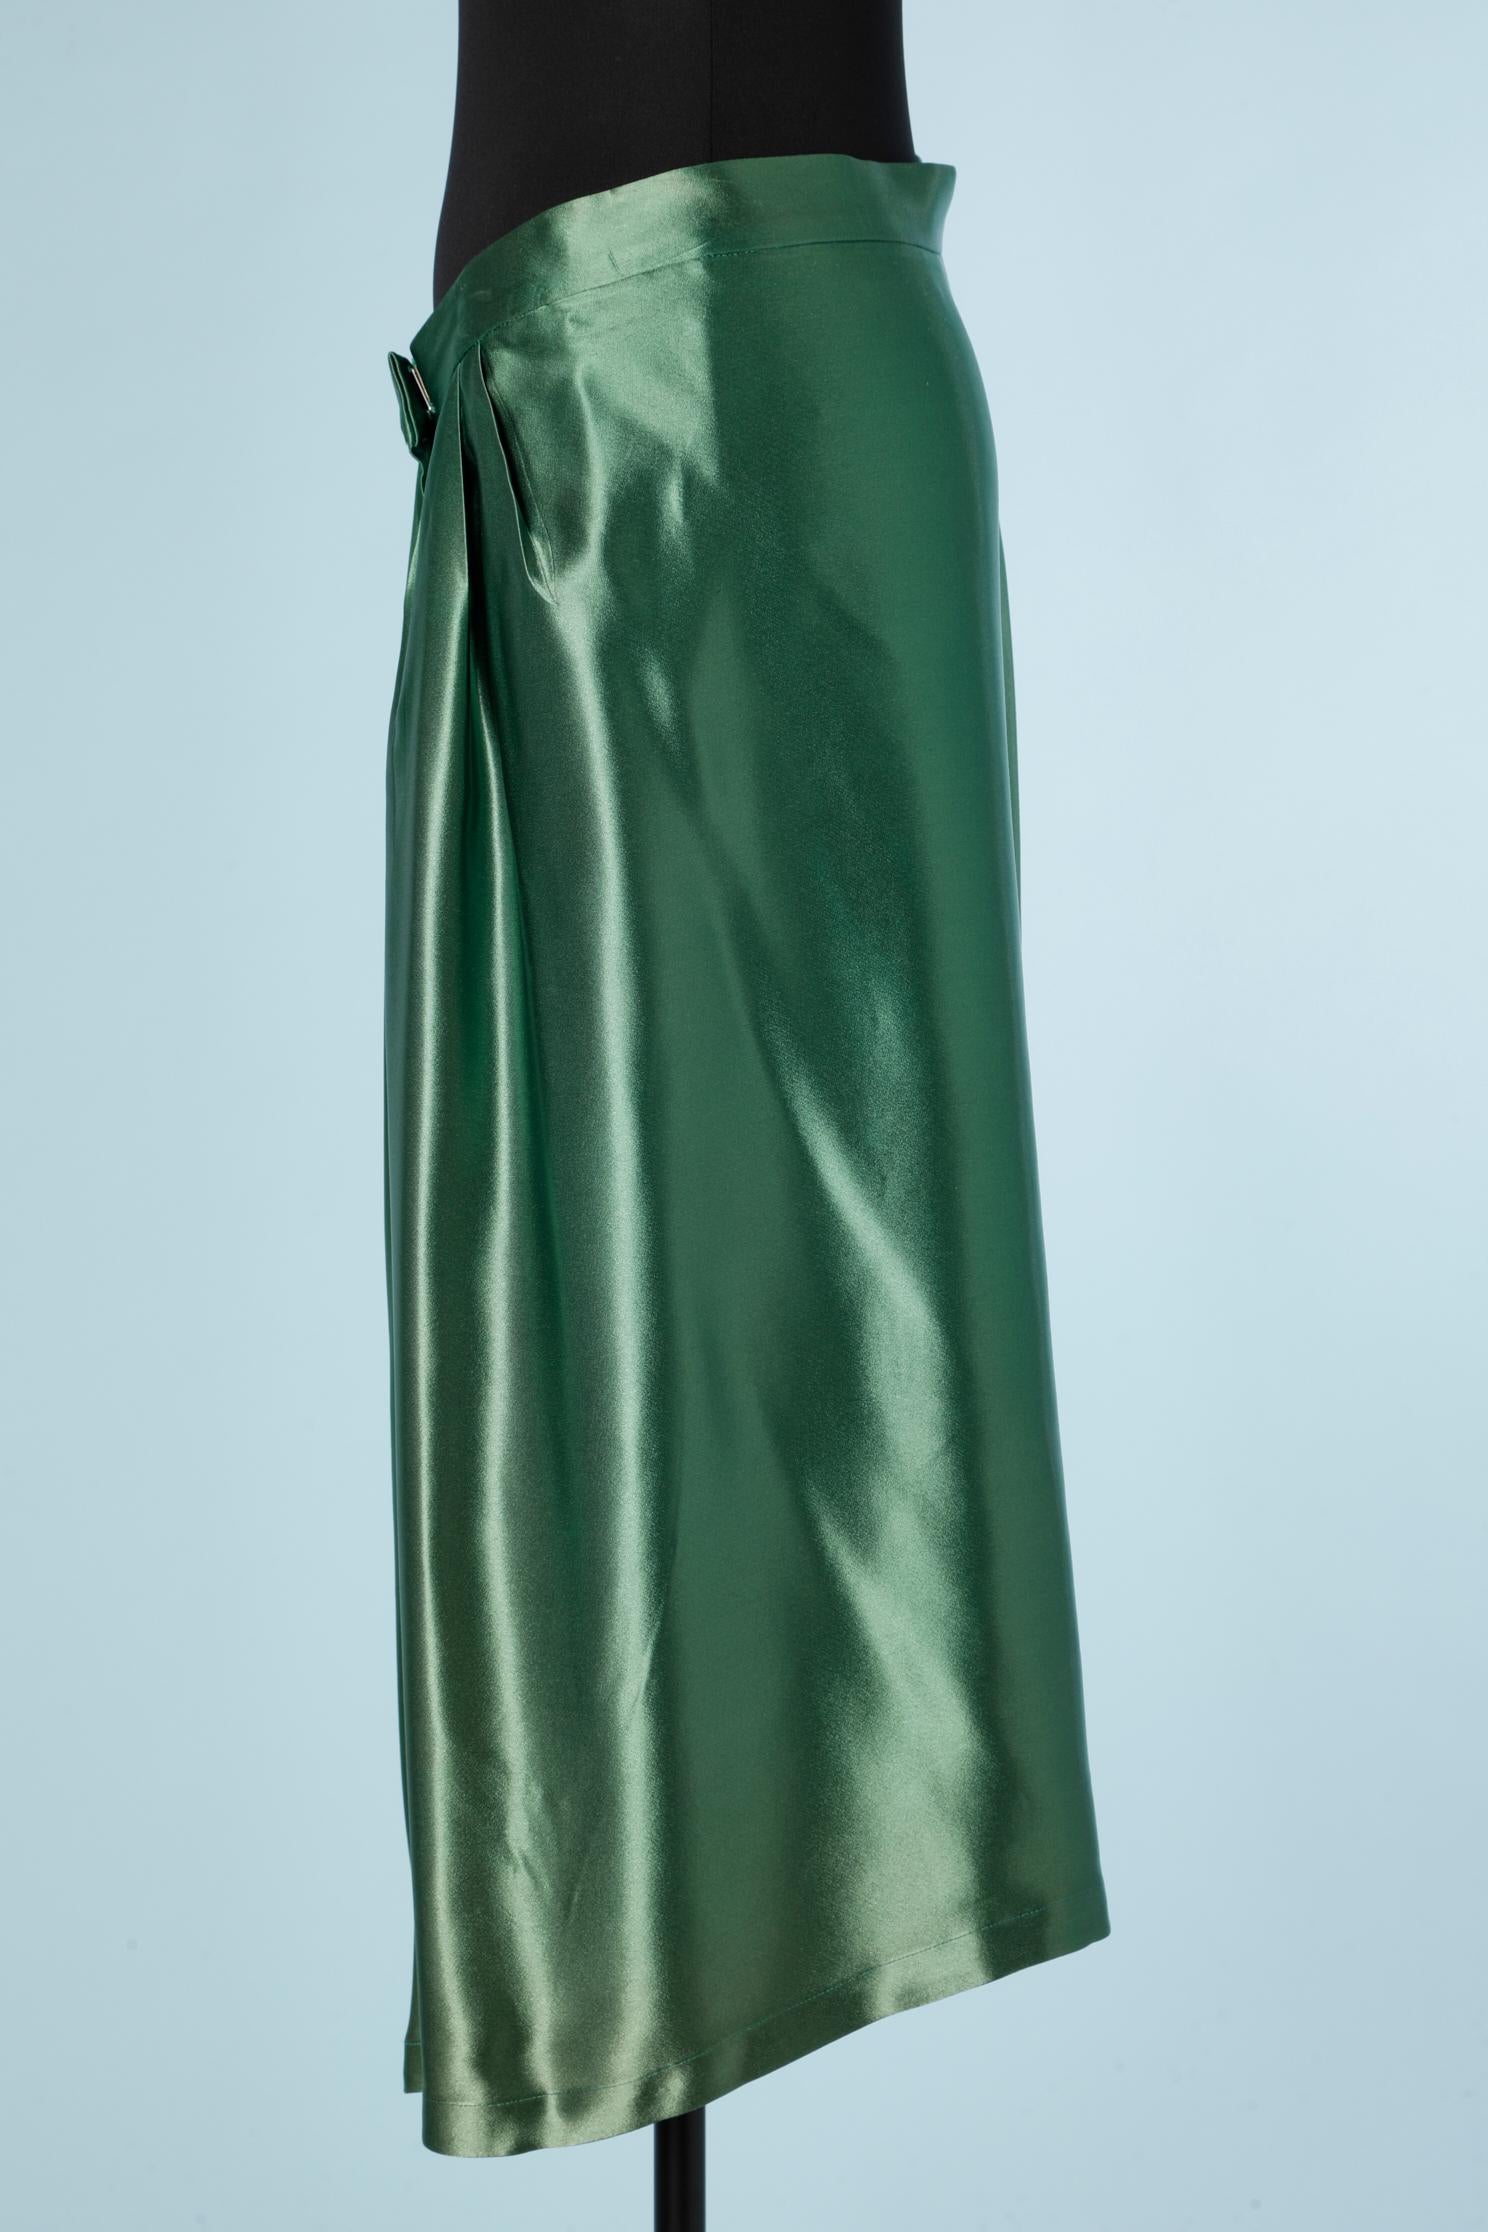 Black Wrap  and draped skirt in emerald silk satin Yves Saint Laurent Rive Gauche  For Sale